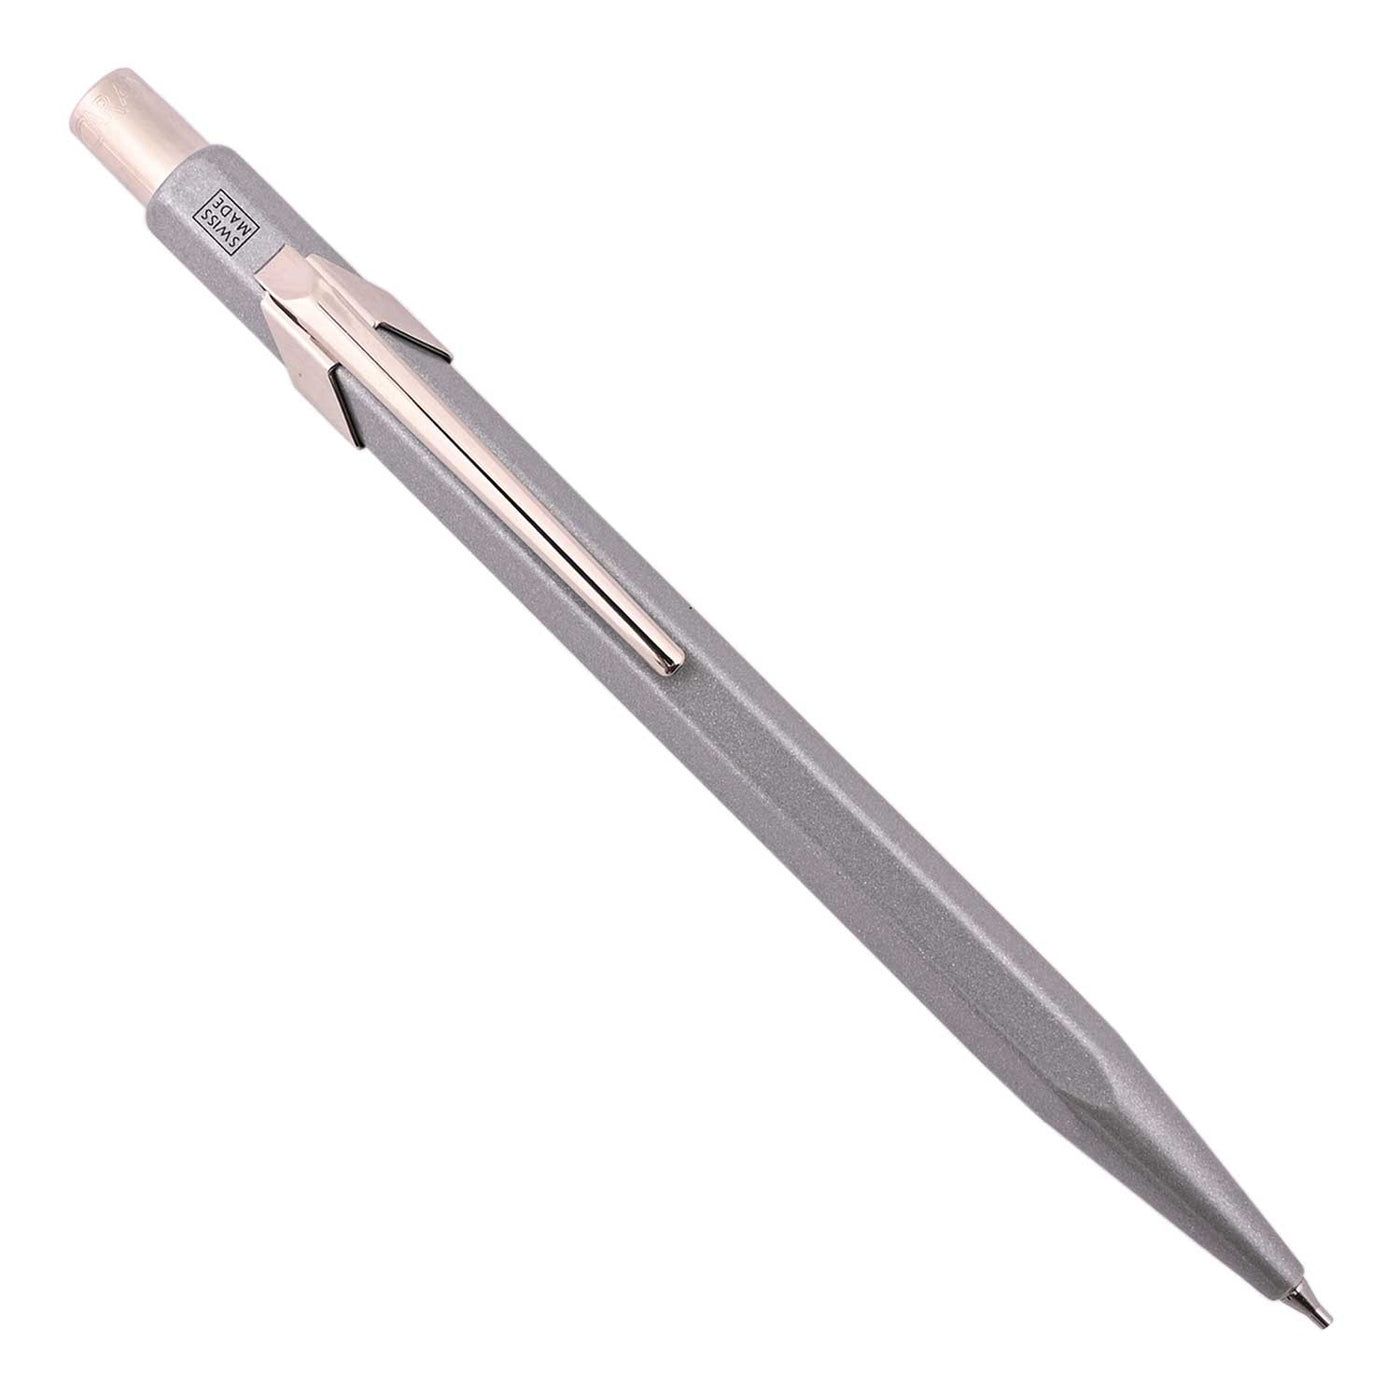  Caran d'Ache 849 Classic 0.7mm Mechanical Pencil - Grey 1